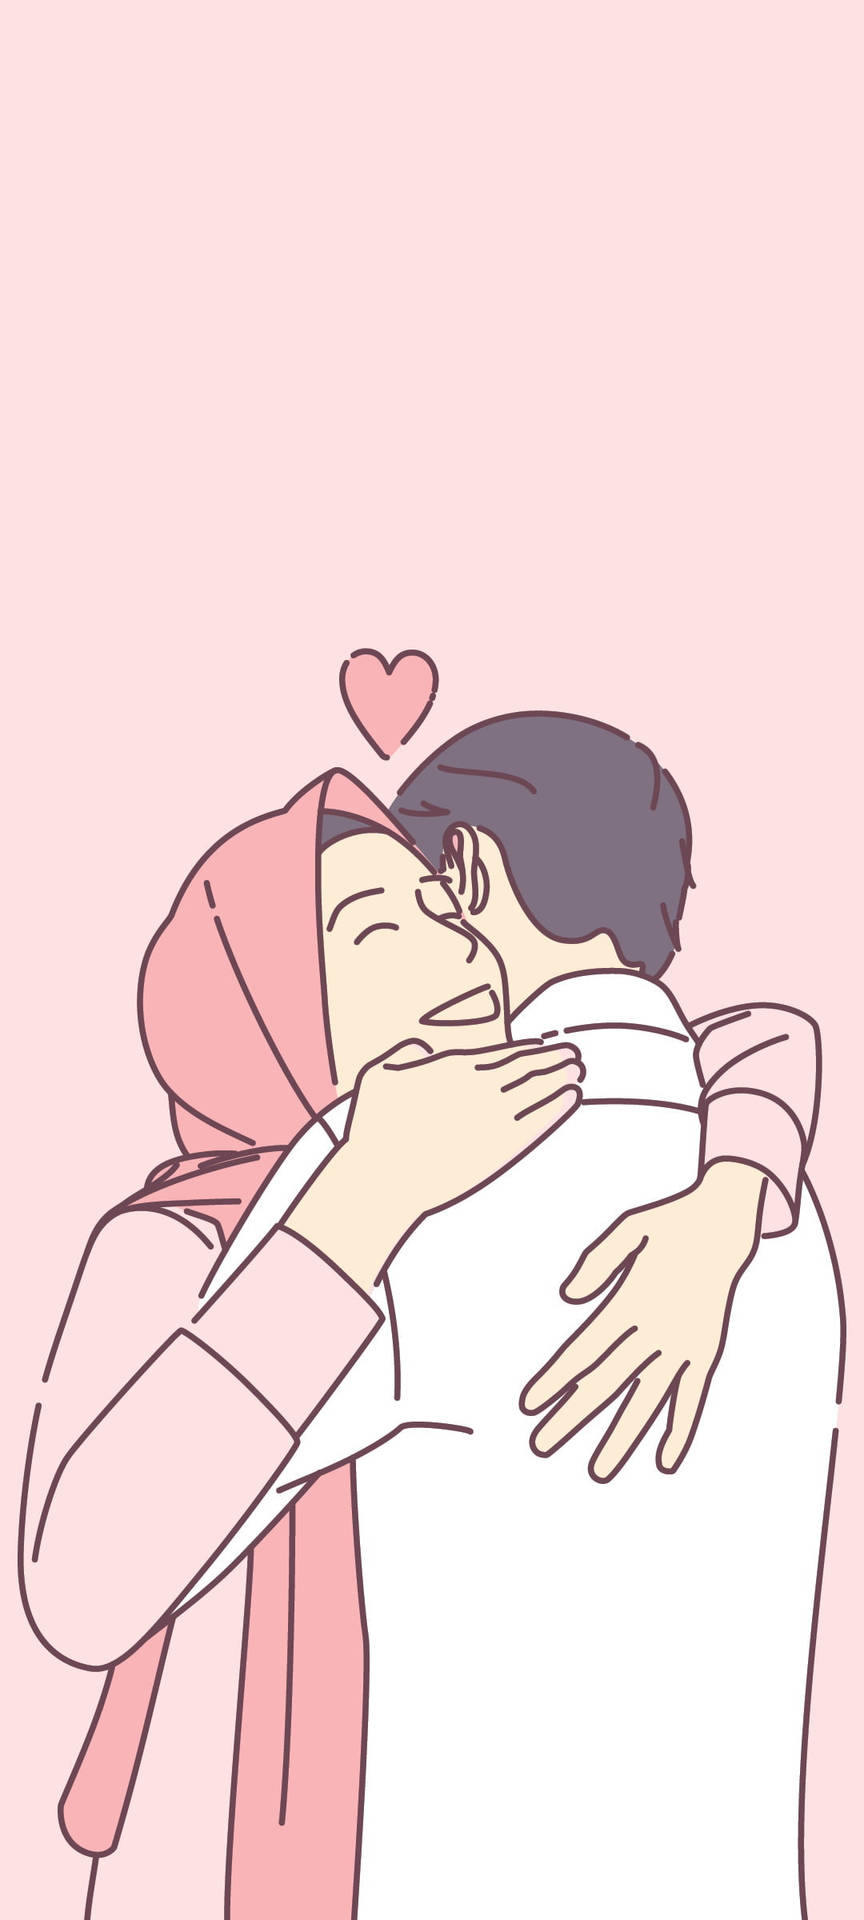 Fondode Pantalla Rosa De Dibujo Animado Con Amor Para El Hijab. Fondo de pantalla